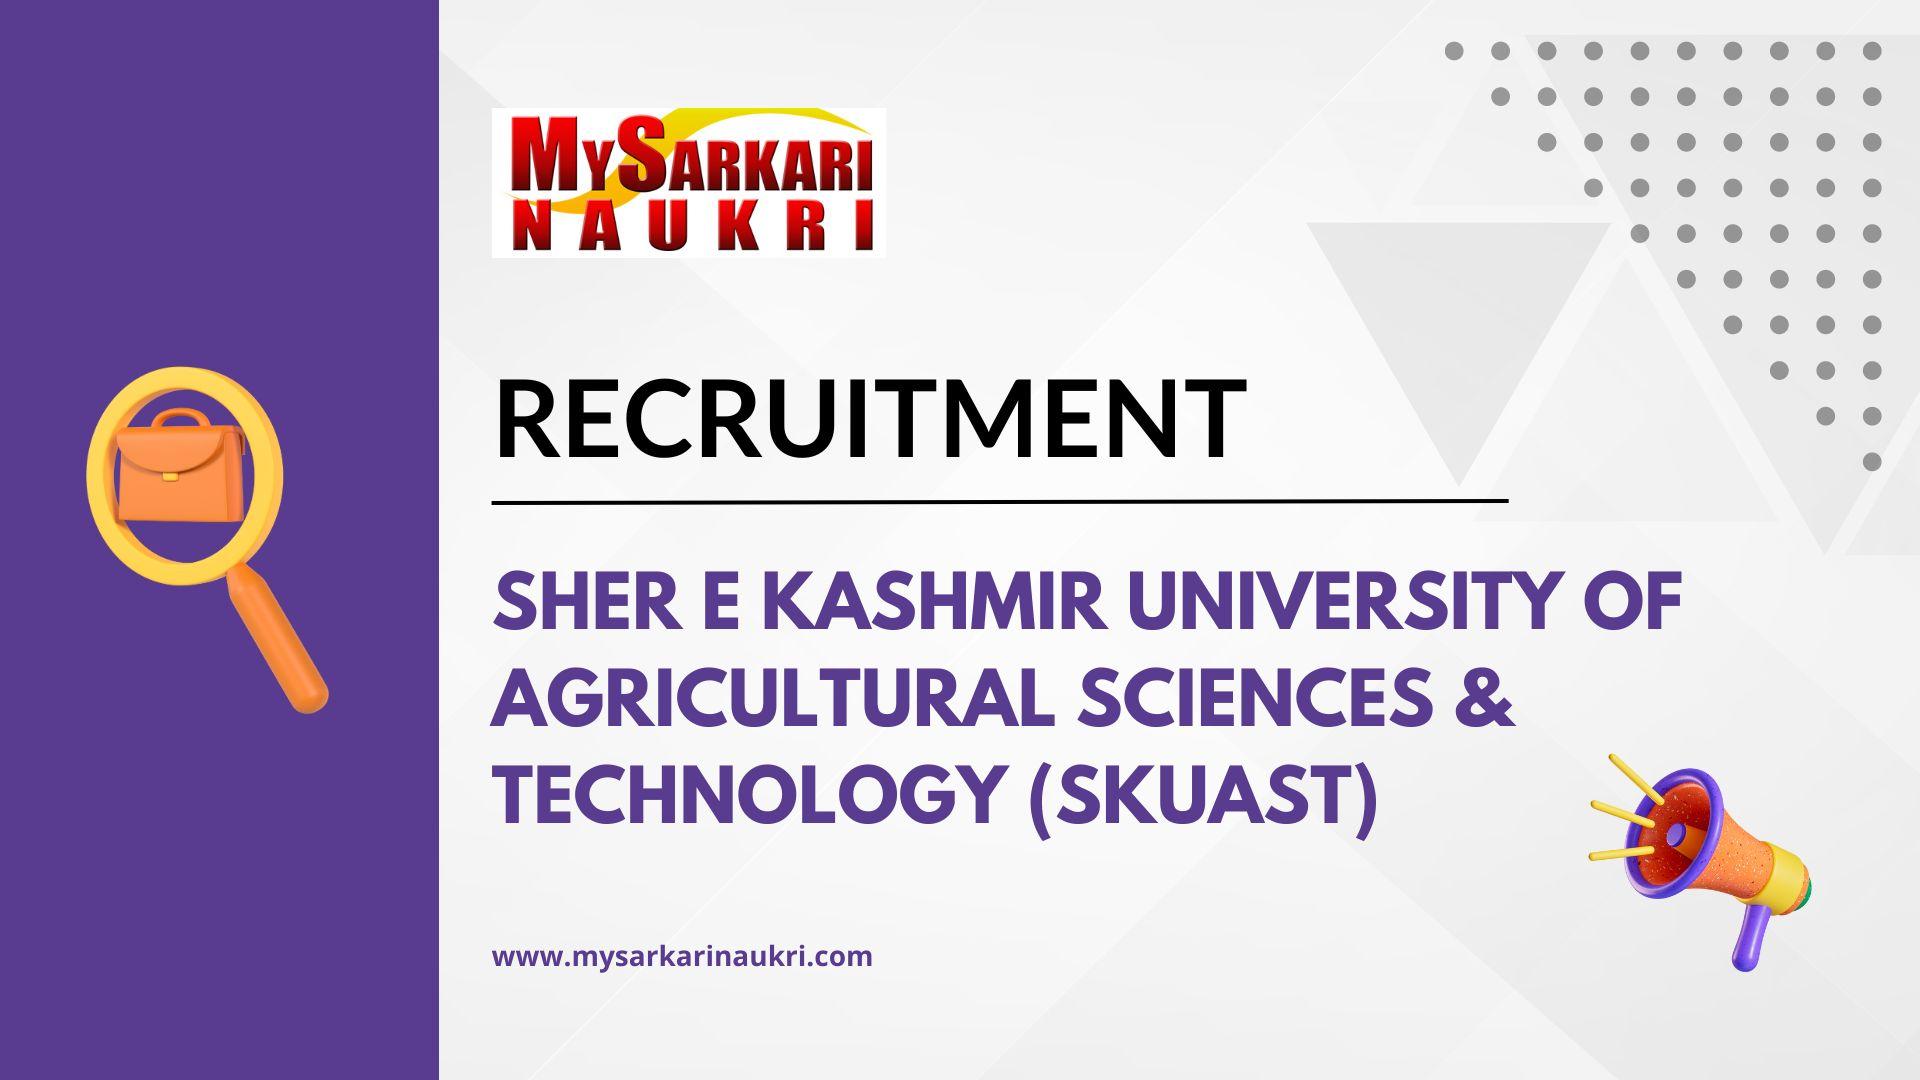 Sher e Kashmir University Of Agricultural Sciences & Technology (SKUAST) Recruitment